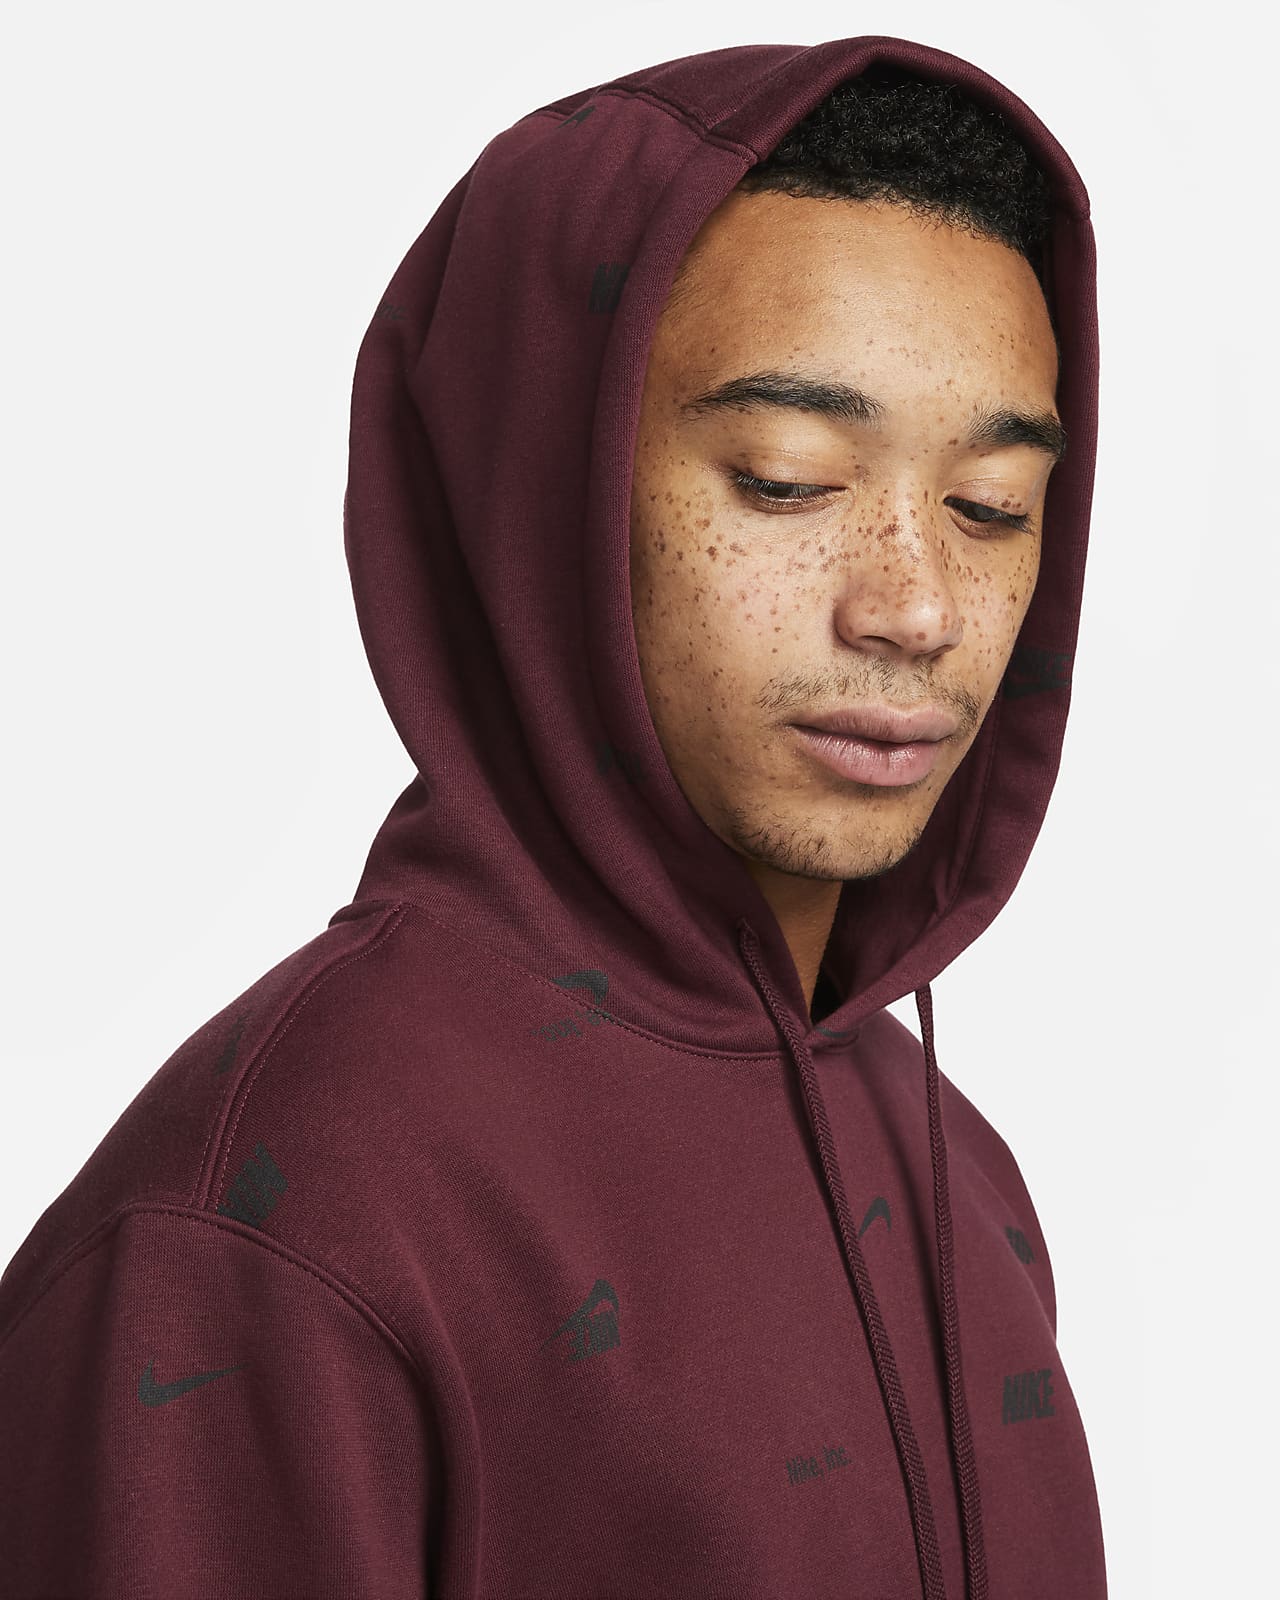 Men's Nike Sportswear Club Fleece Allover Printed Pullover Hoodie